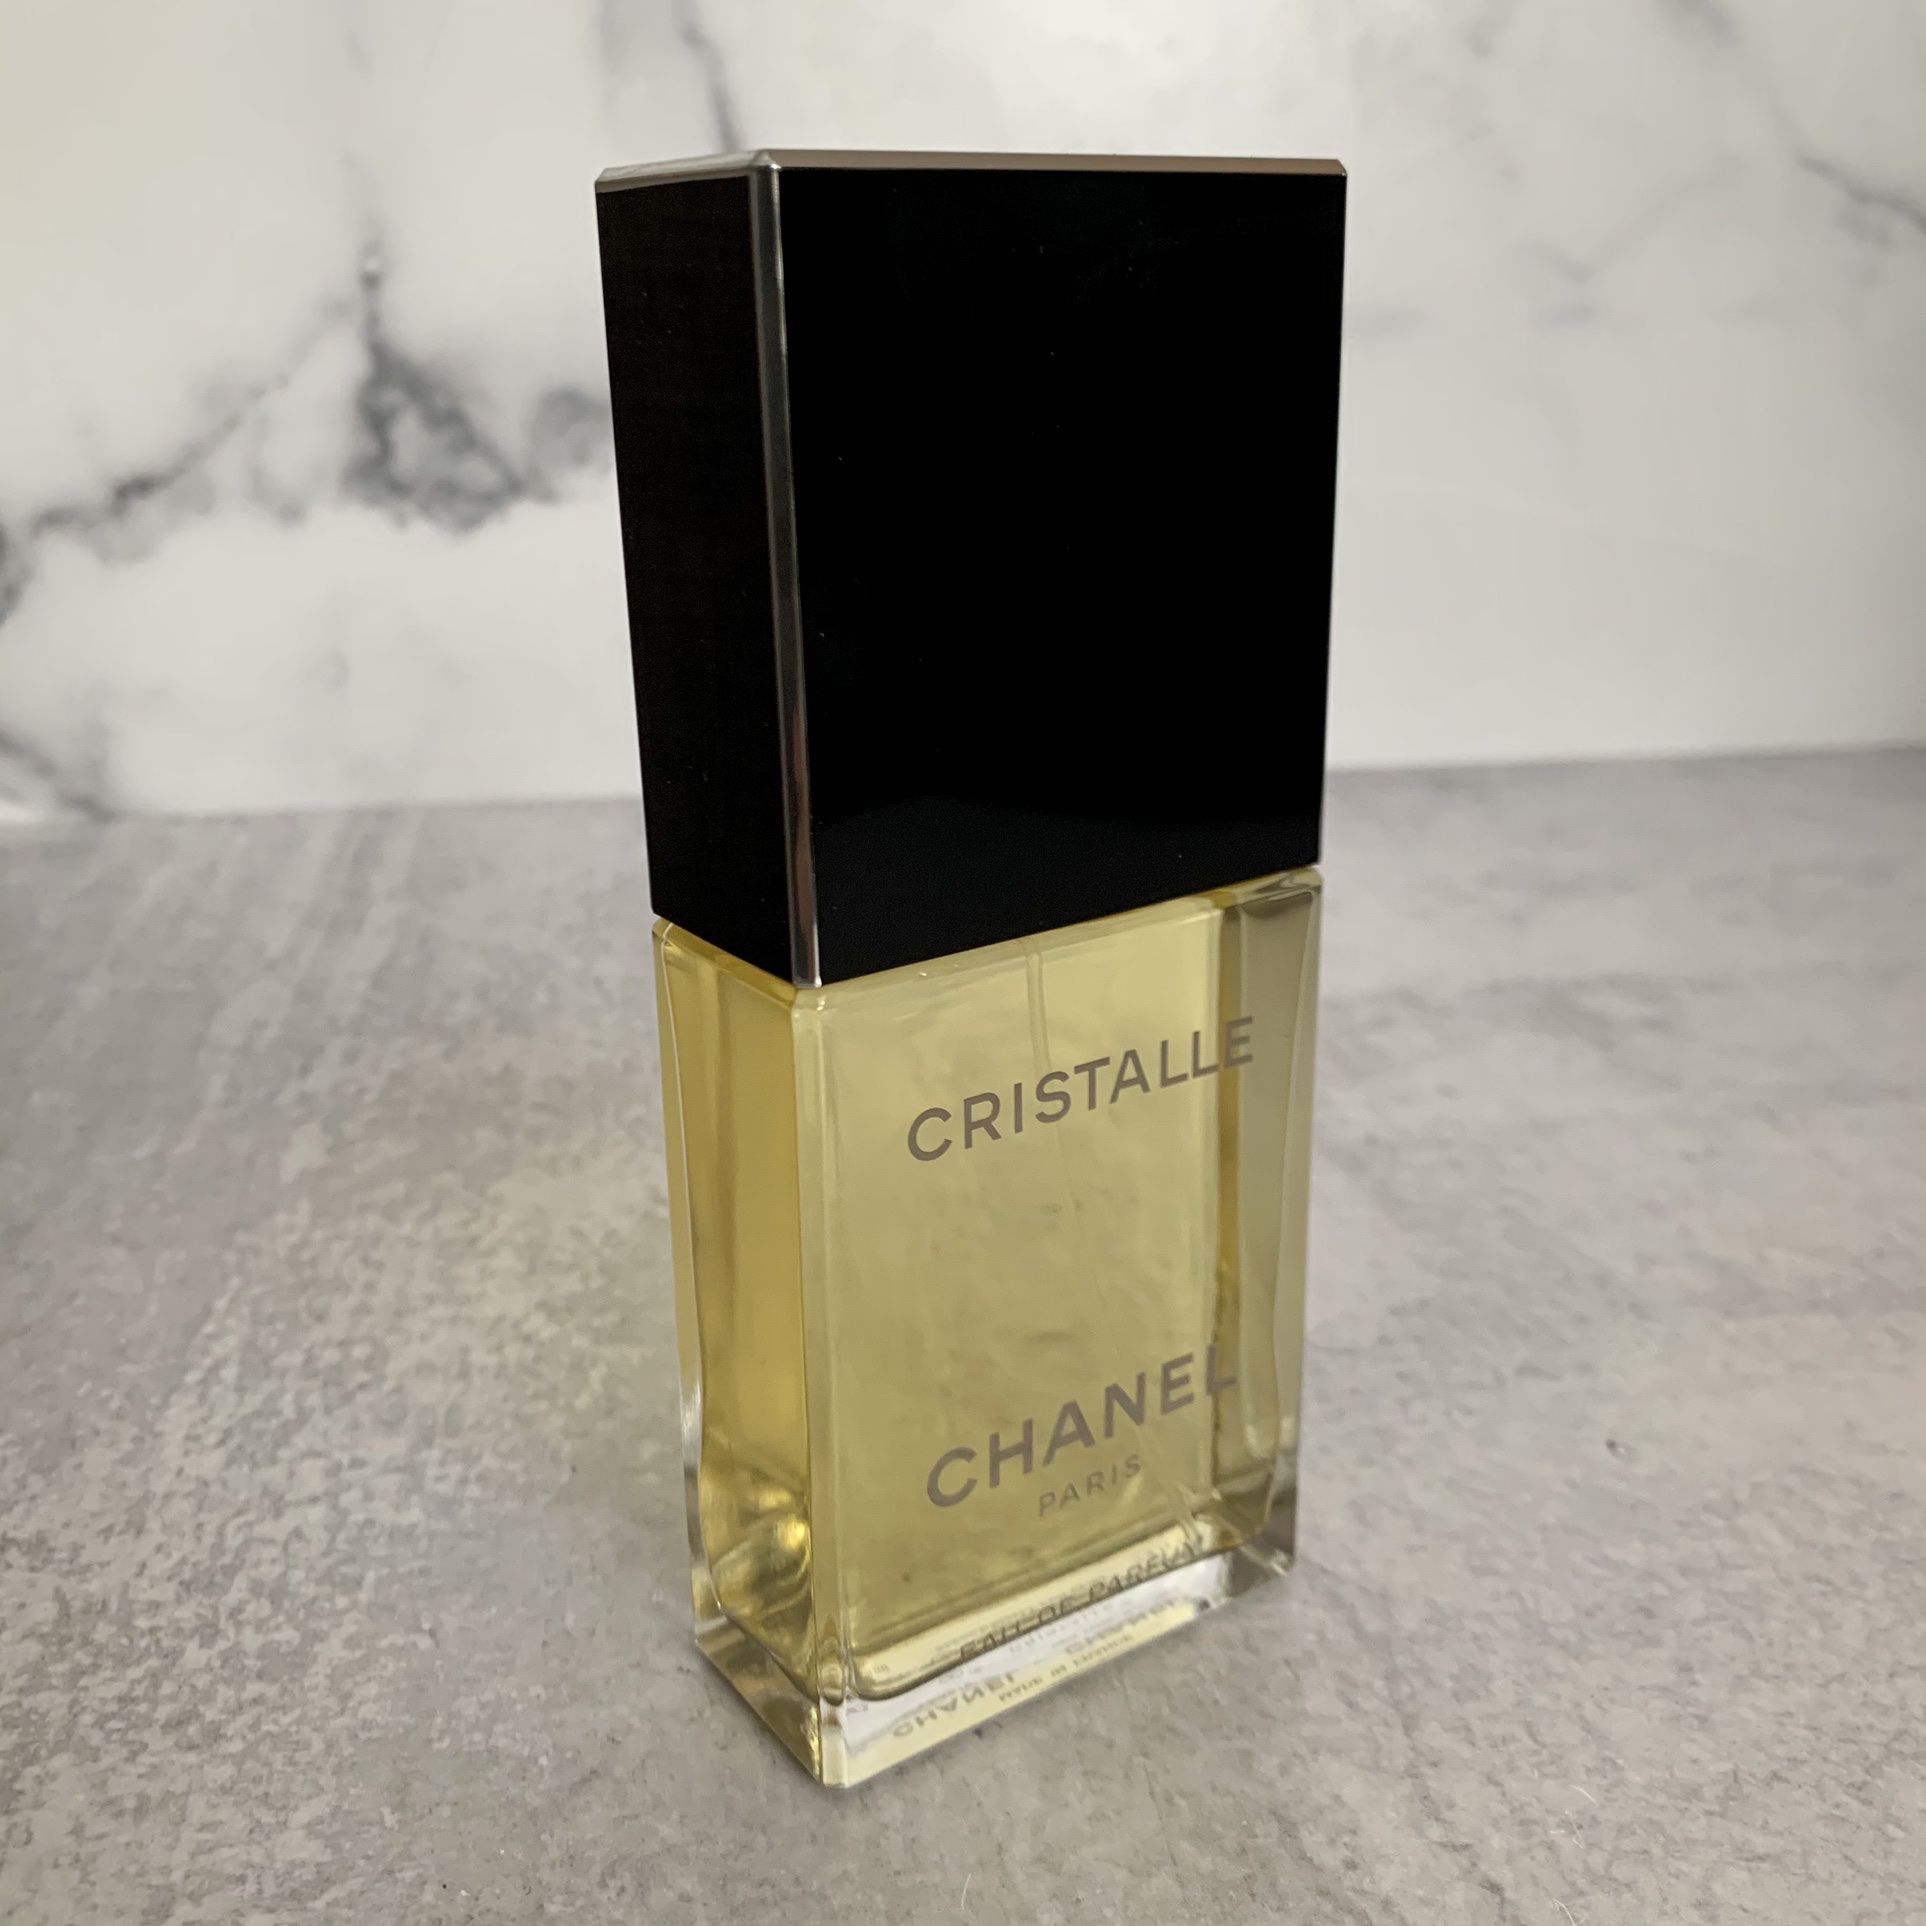 Chanel Cristalle Eau De Parfum EDP Perfume Spray 3.4oz / 100ml Large Full Size New